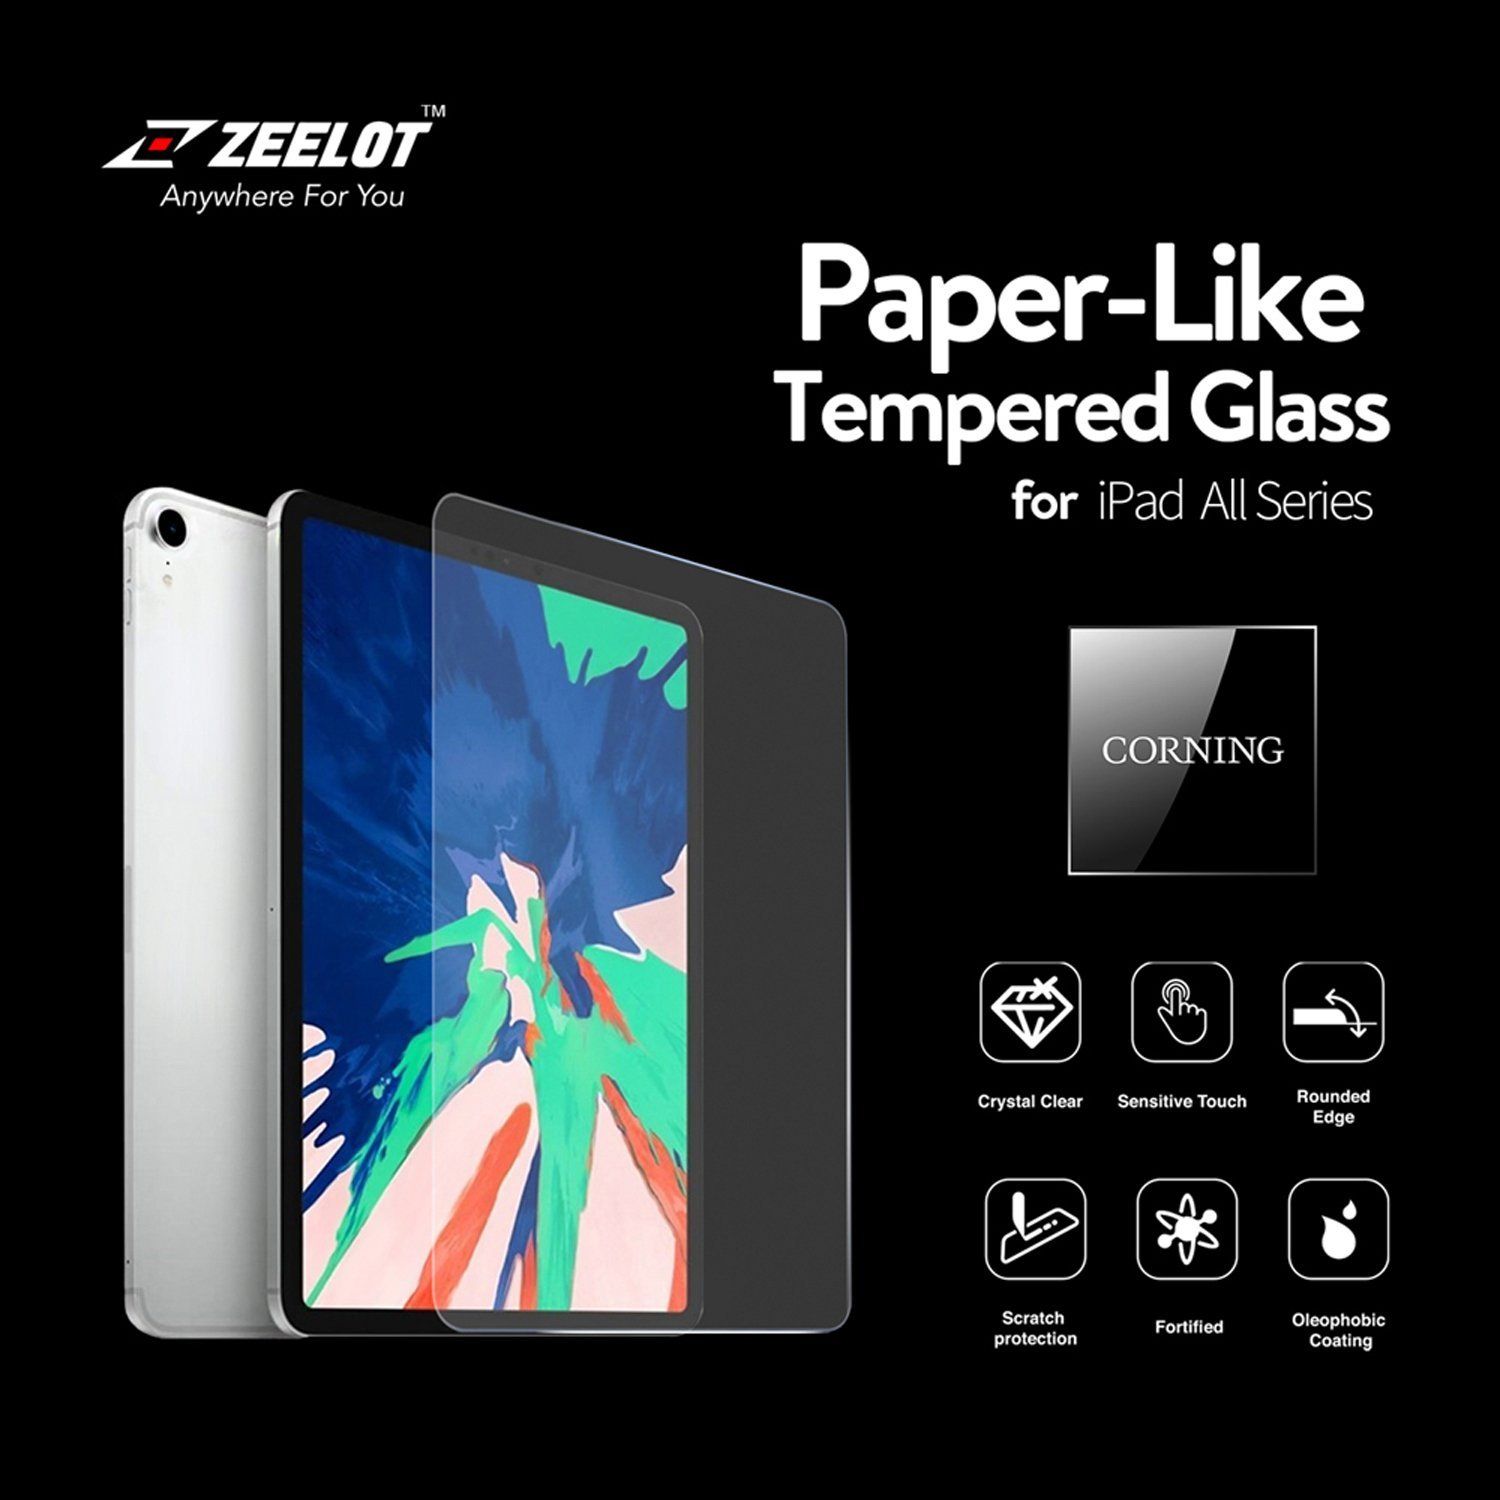 ZEELOT PureGlass 2.5D Tempered Glass Screen Protector for iPad Air/Pro 10.5" (2019/2017), Clear Tempered Glass ZEELOT 